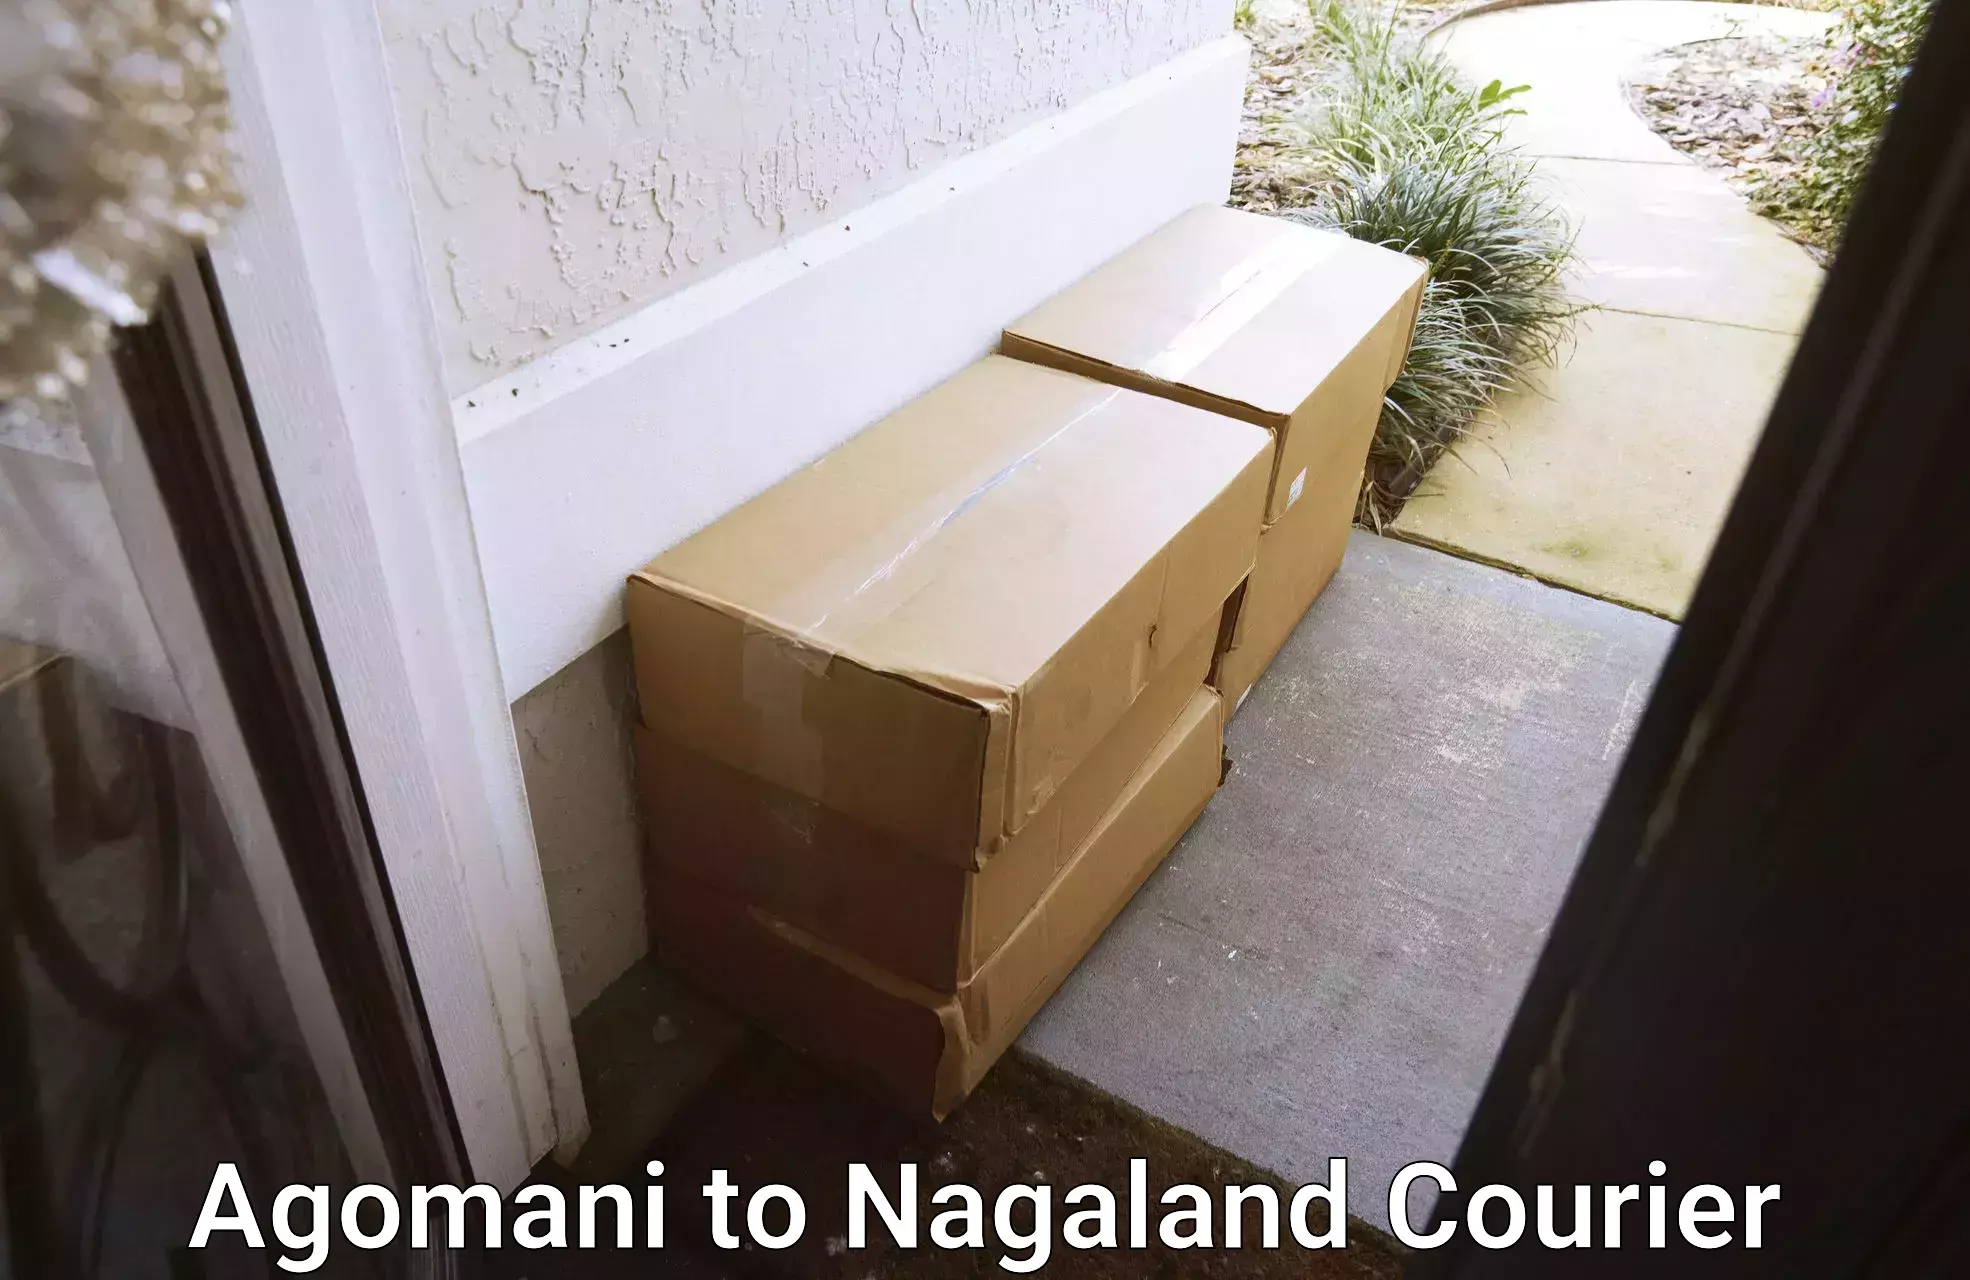 International parcel service Agomani to Nagaland